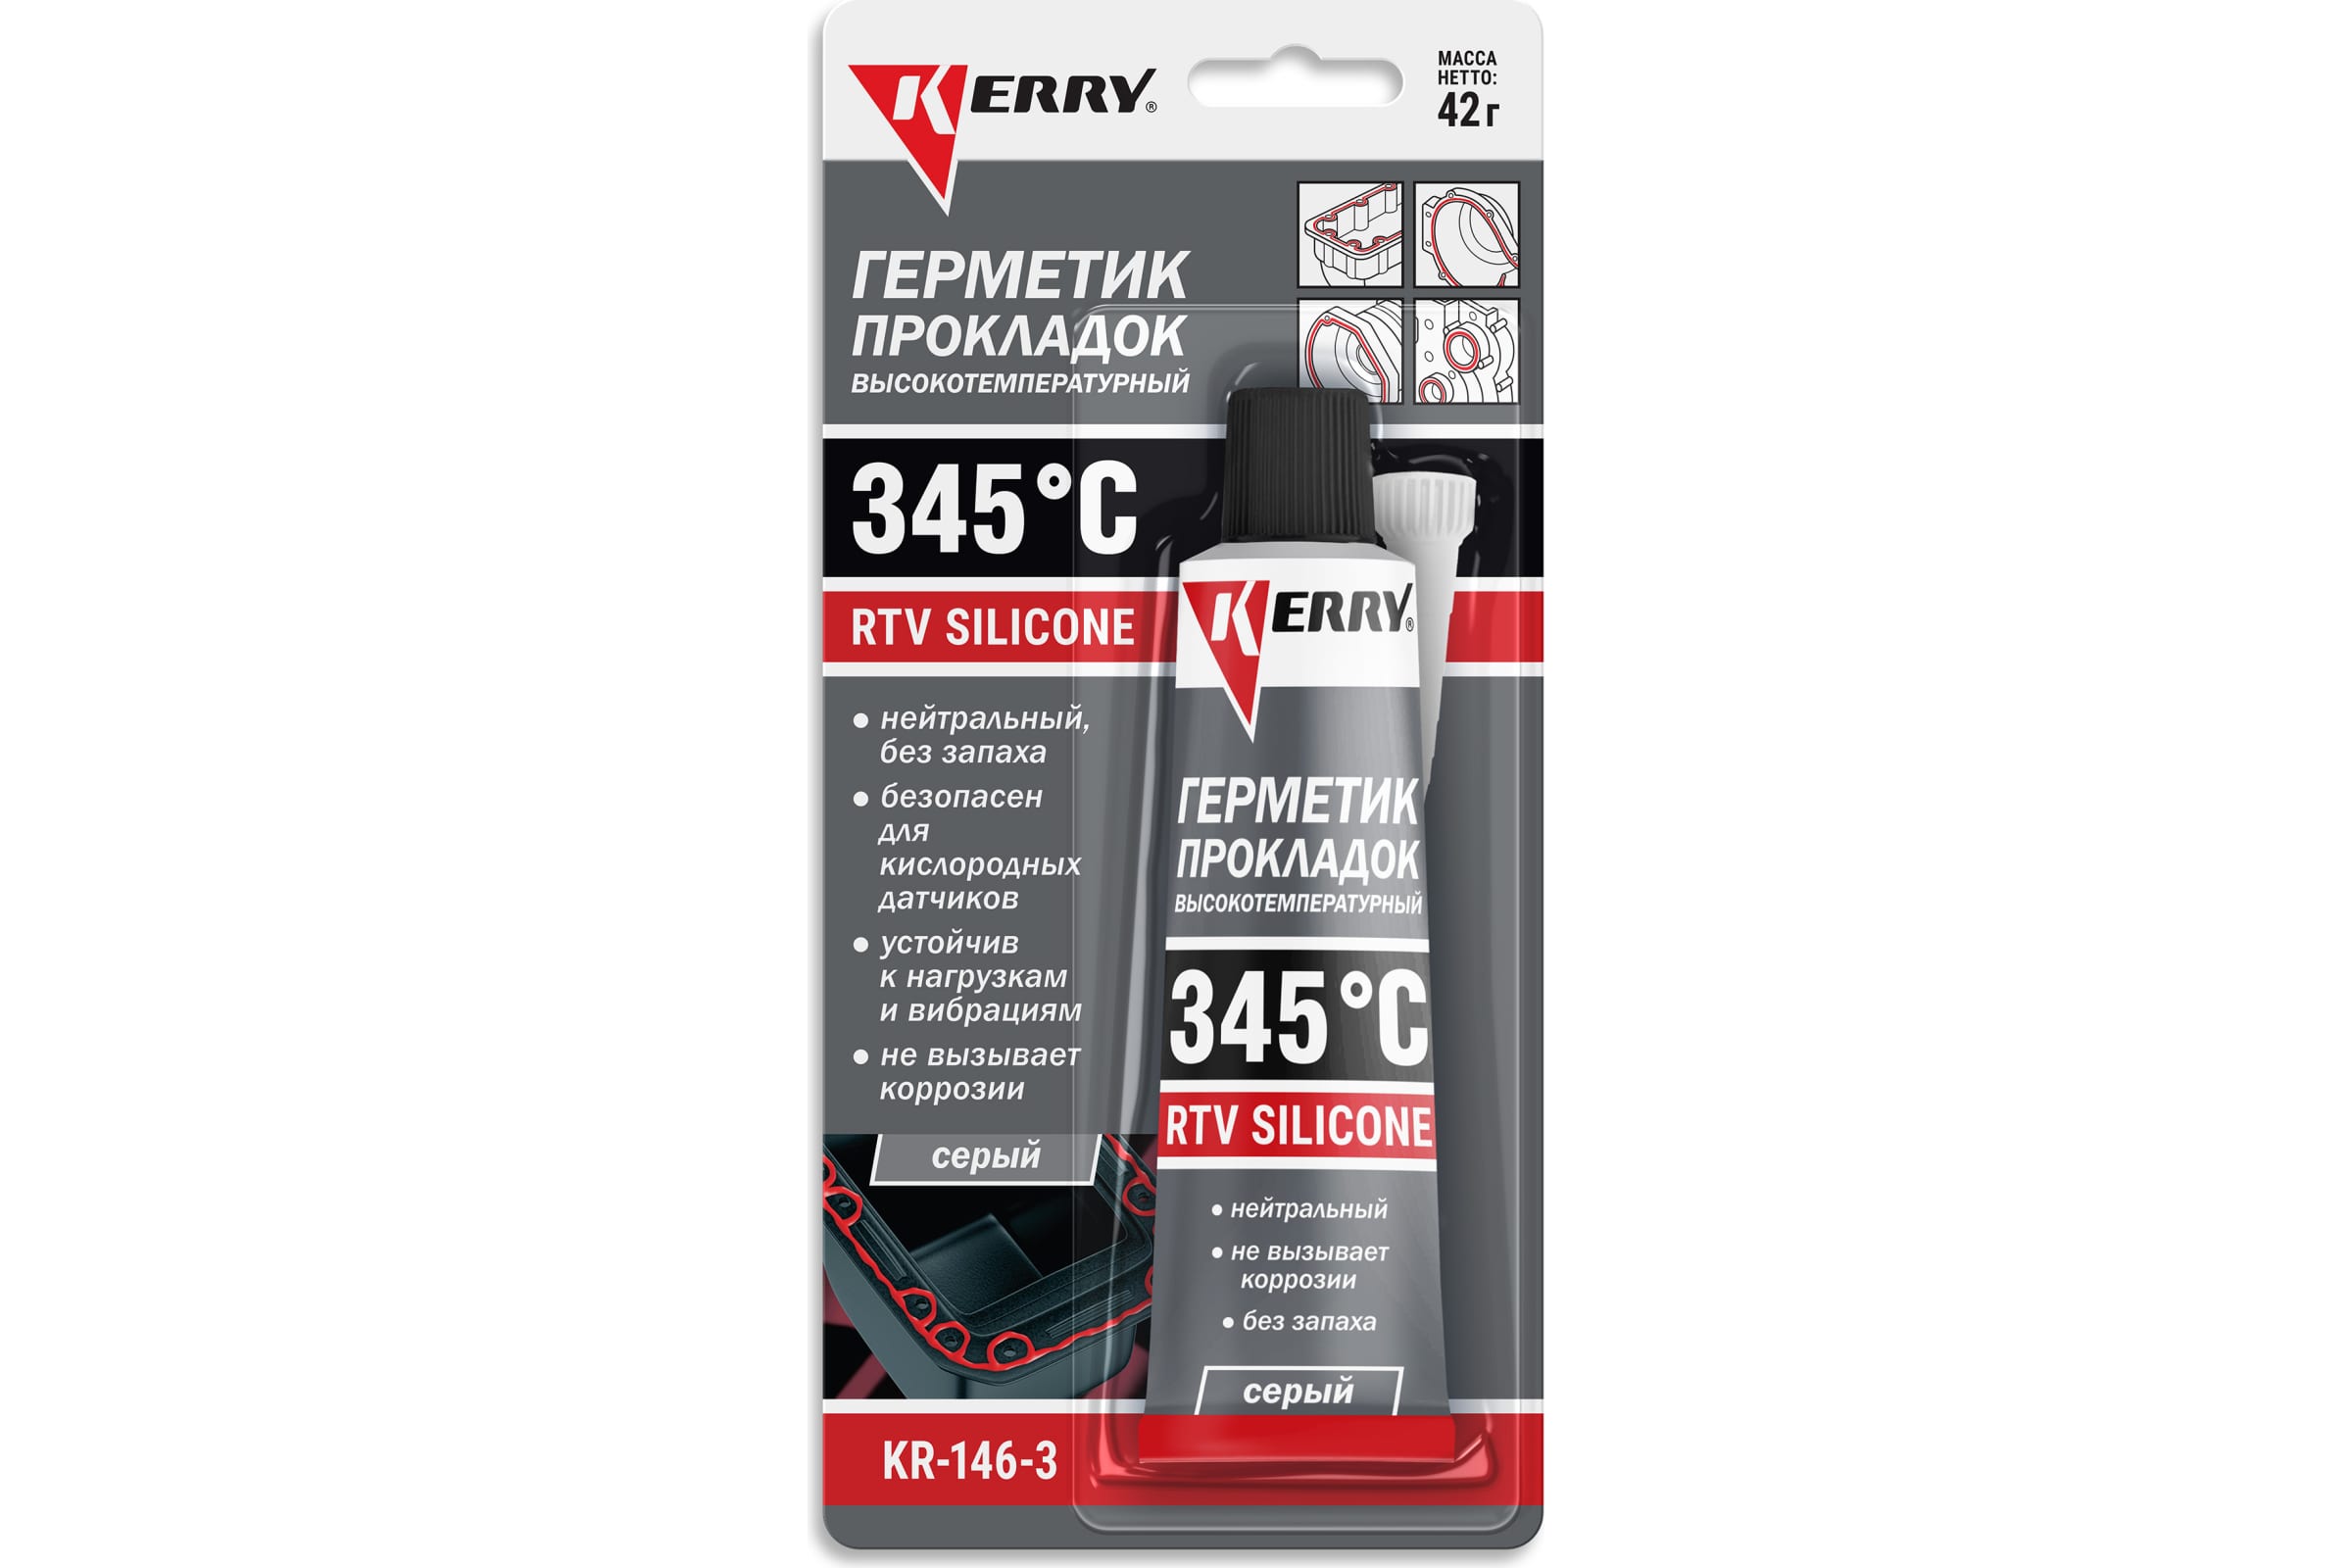 KERRY Герметик прокладок высокотемпературный нейтральный серый RTV SILICONE KR-146-3